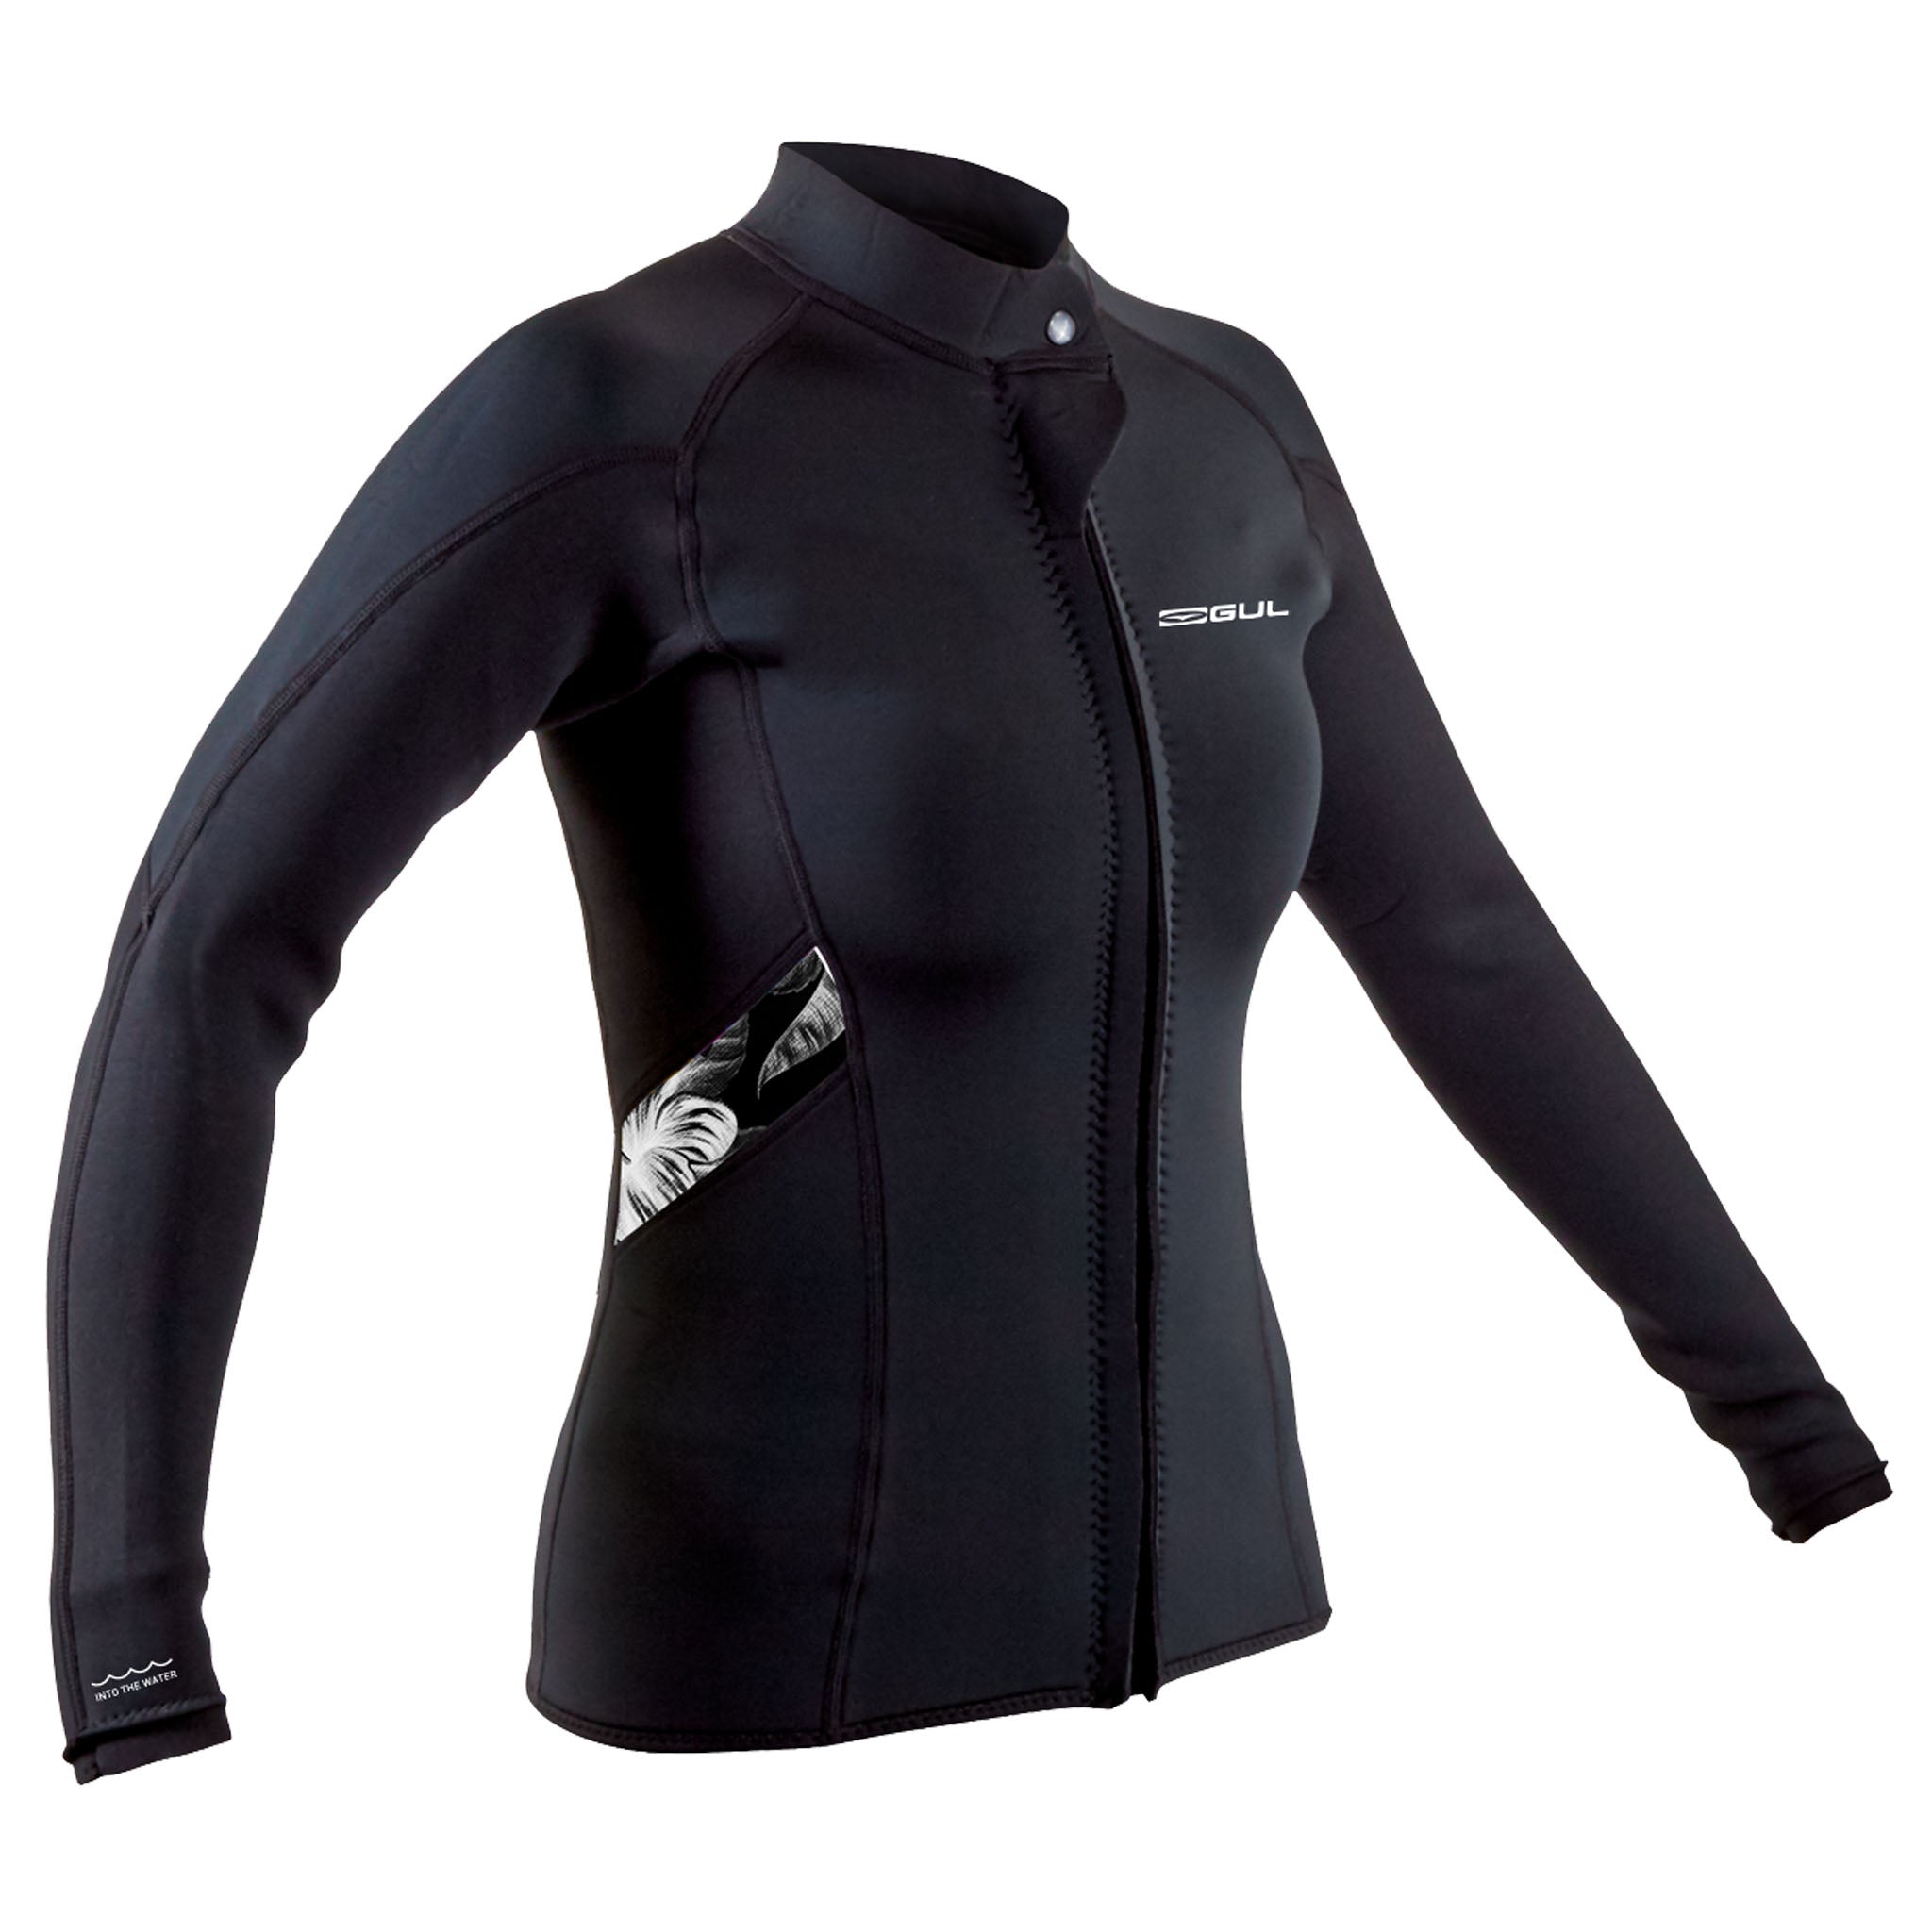 Gul Response 3/2mm Women's Wetsuit Jacket